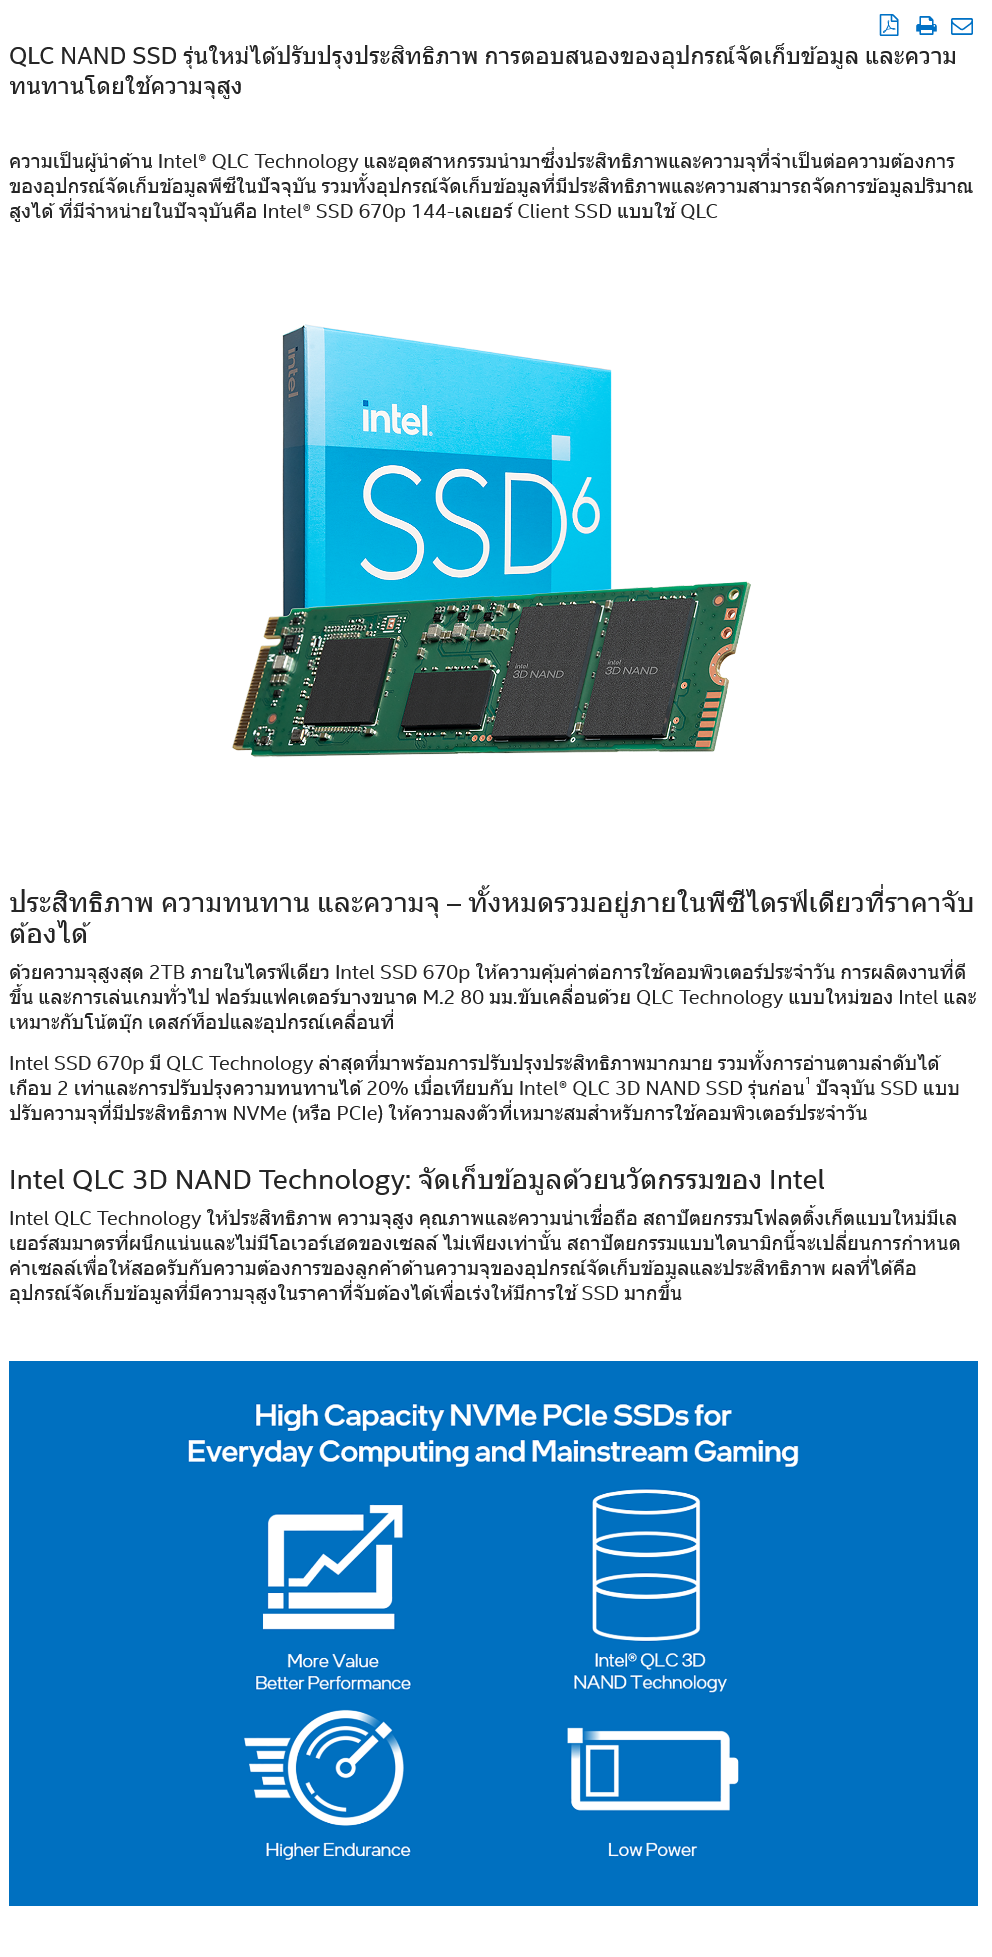 screenshot 2021 06 18 at 13 28 26 e0b882e0b989e0b8ade0b8a1e0b8b9e0b8a5e0b8aae0b8a3e0b8b8e0b89be0b980e0b881e0b8b5e0b988e0b8a2e0b8a7e0b881e0b8b11 Intel NUC 11 Performance kit   NUC11PAHi7 with Intel 670P 1TB SSD Review